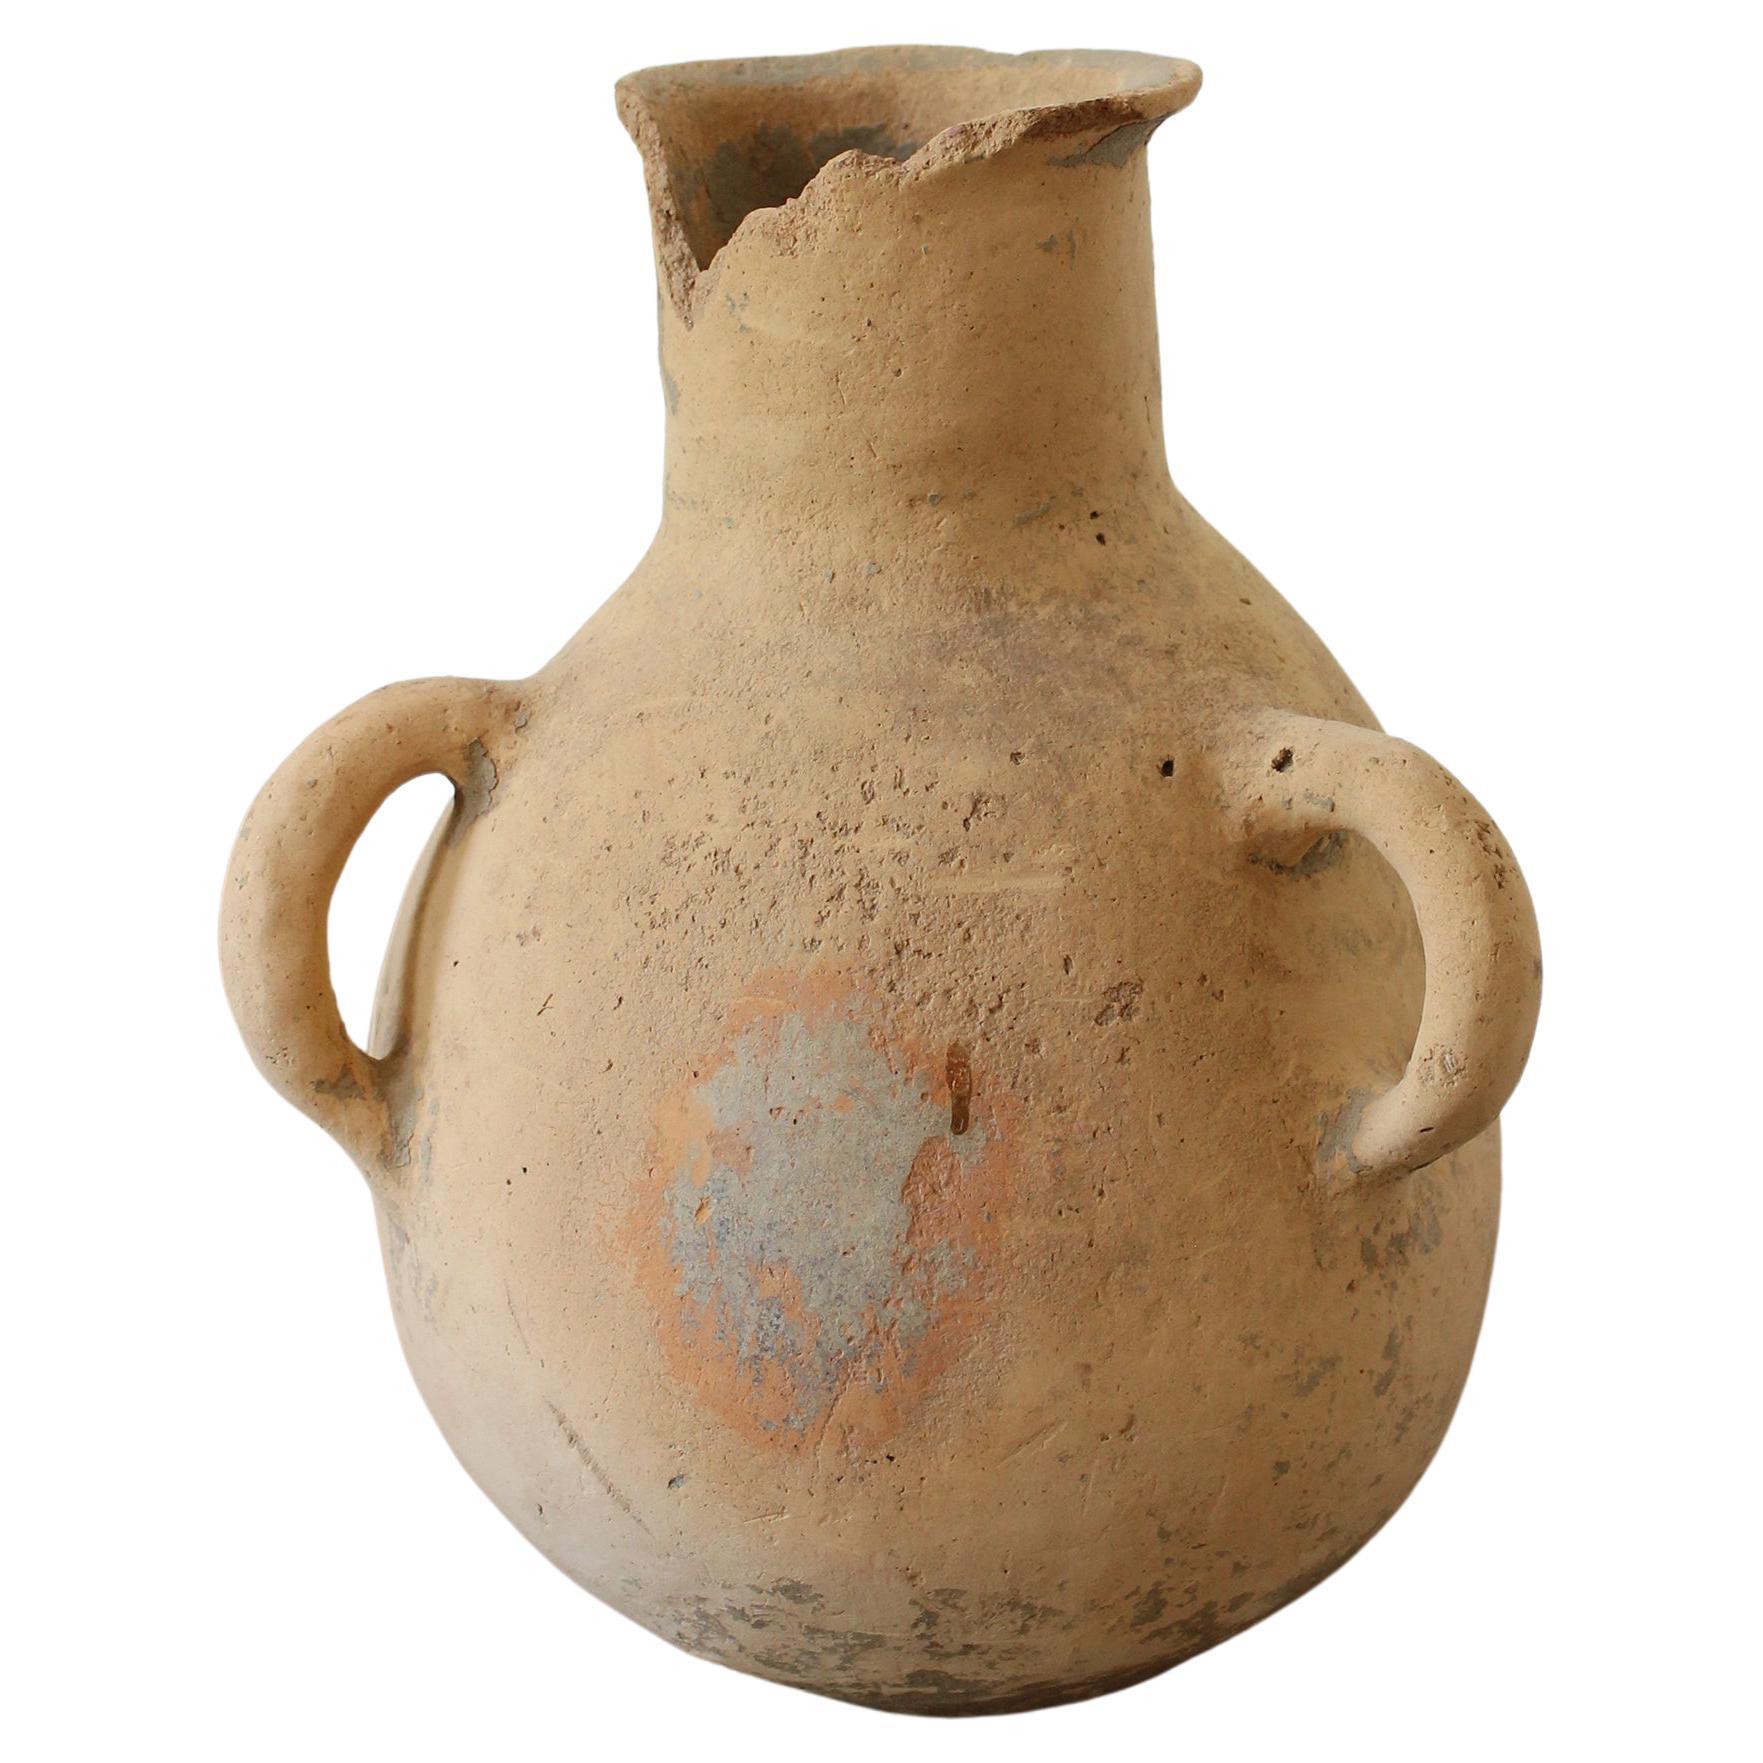 Antique Terracotta Vessel, 19th Century, with Patina, Wabi Sabi, Primitive Pot